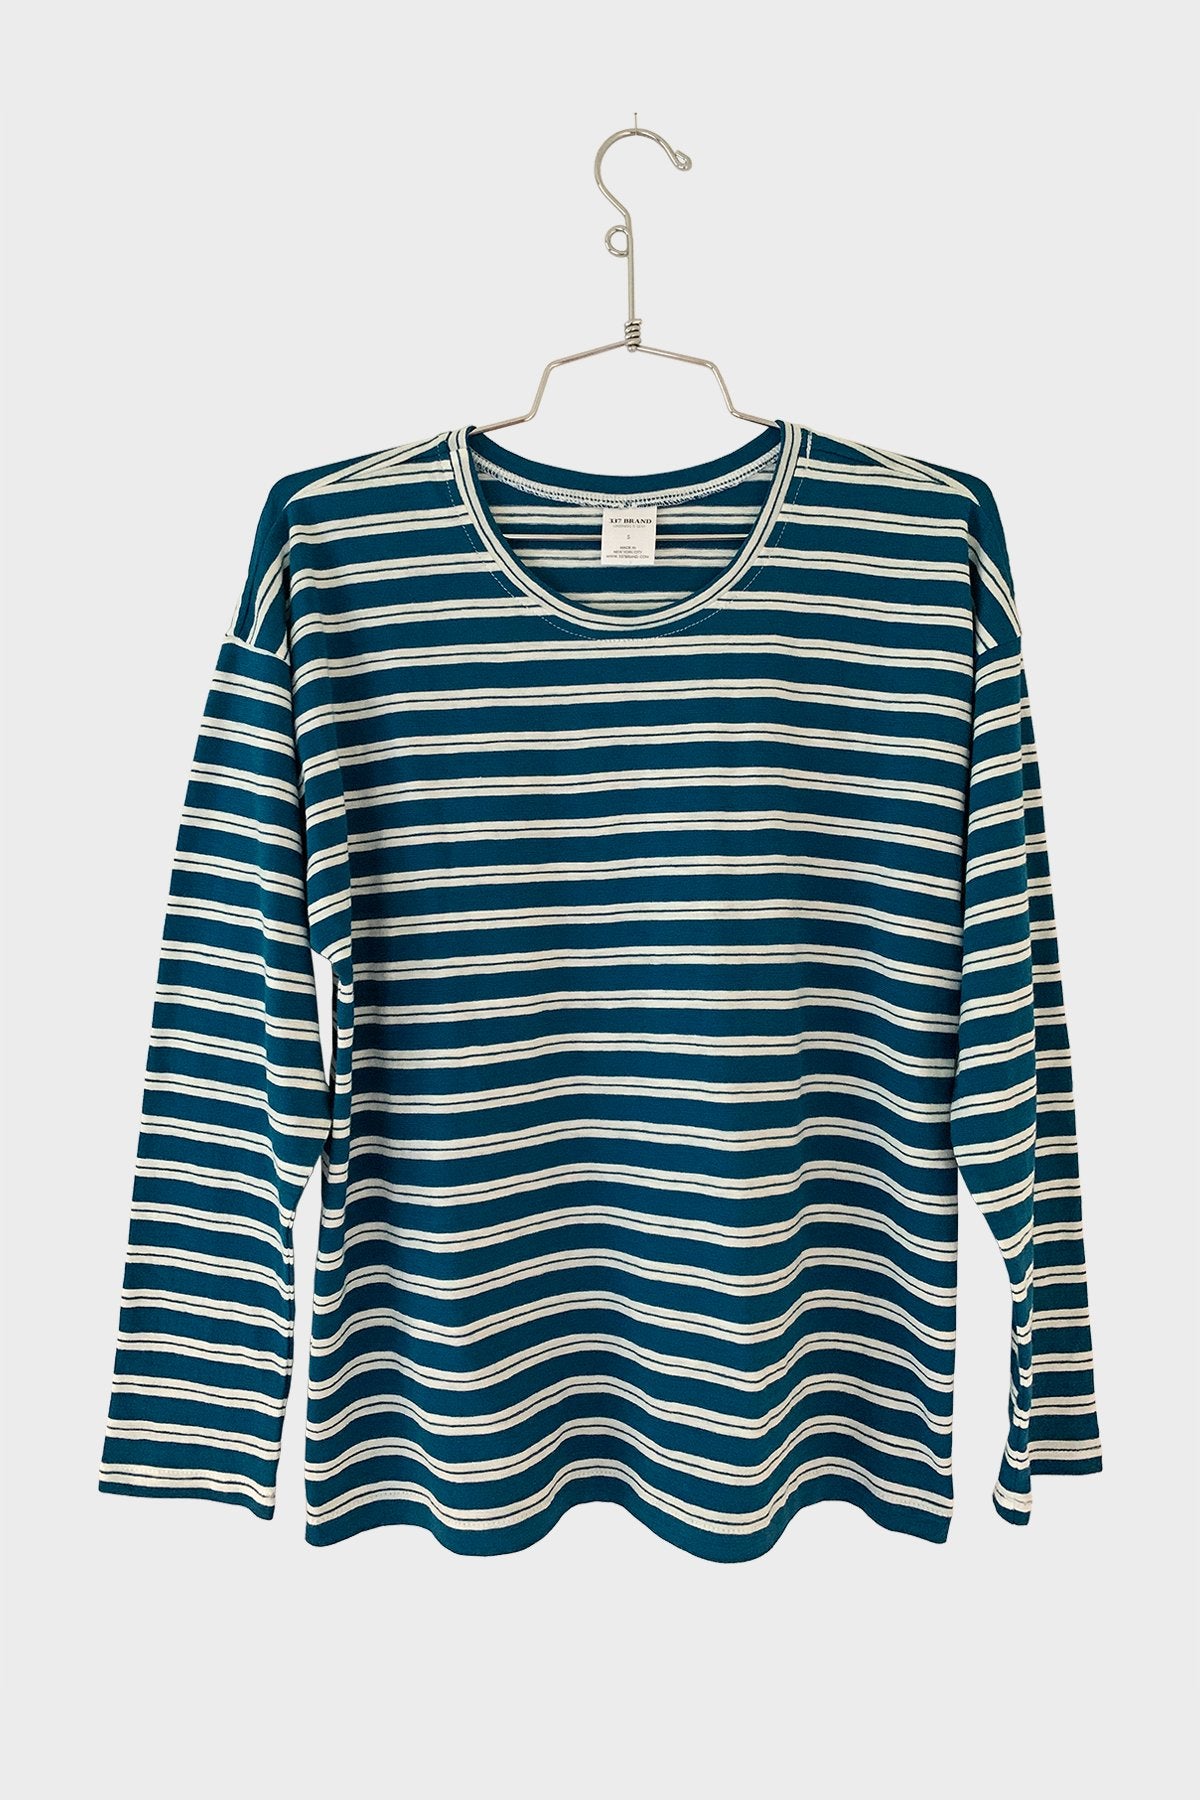 Striped Long Sleeve Tee - 337 BRAND Women's Sustainable Loungewear ?id=16641564639266